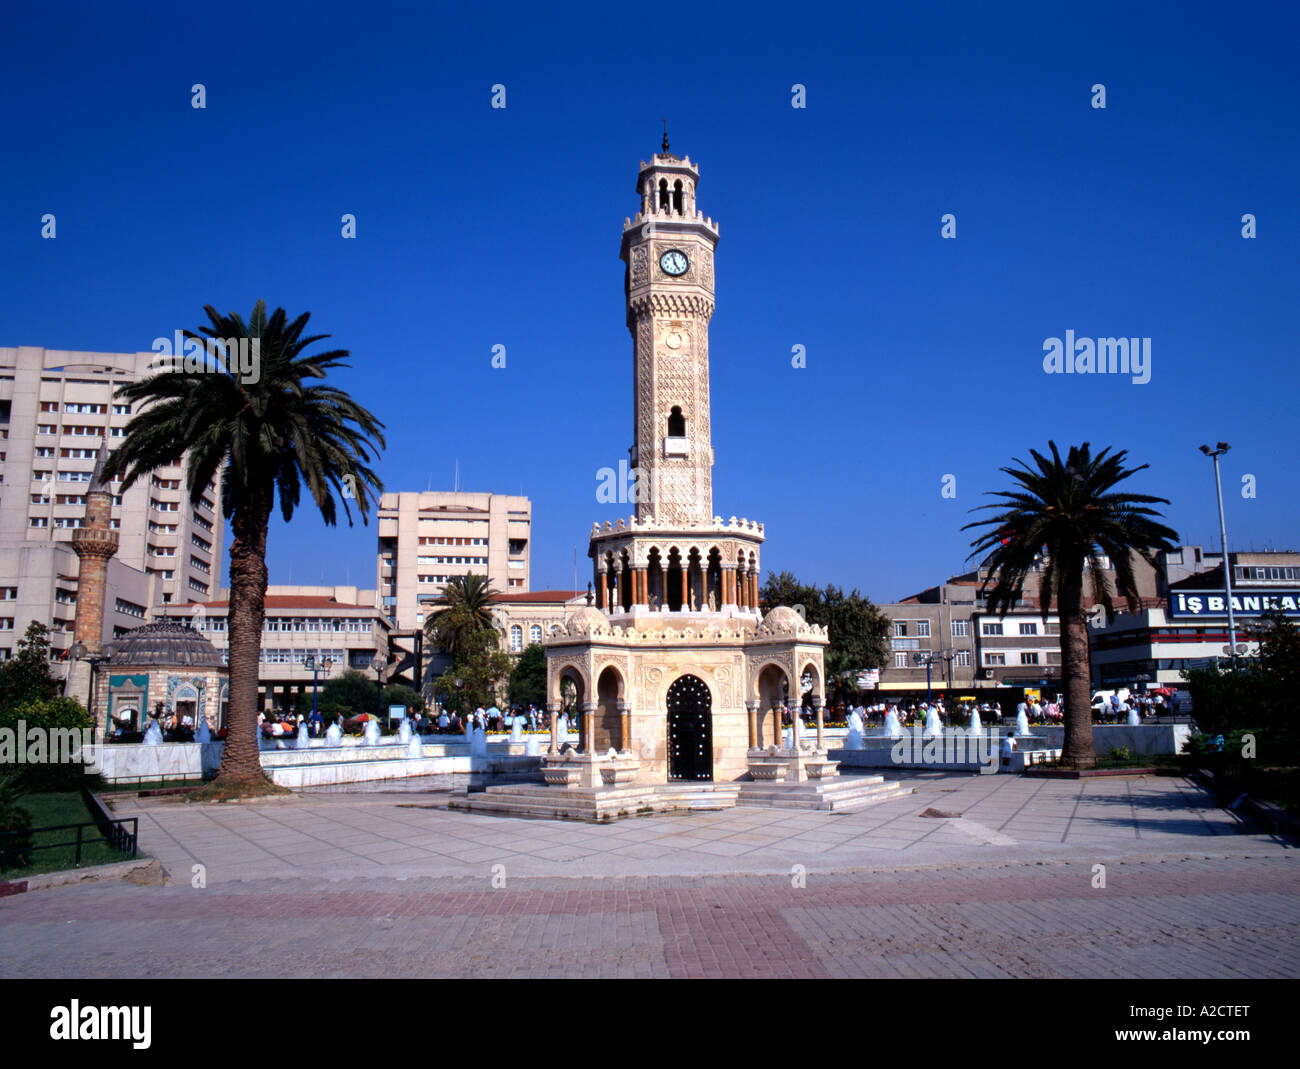 Die berühmten Saat Kulesi Uhrenturm stehend in Konak Square, Ismir Türkei Stockfoto